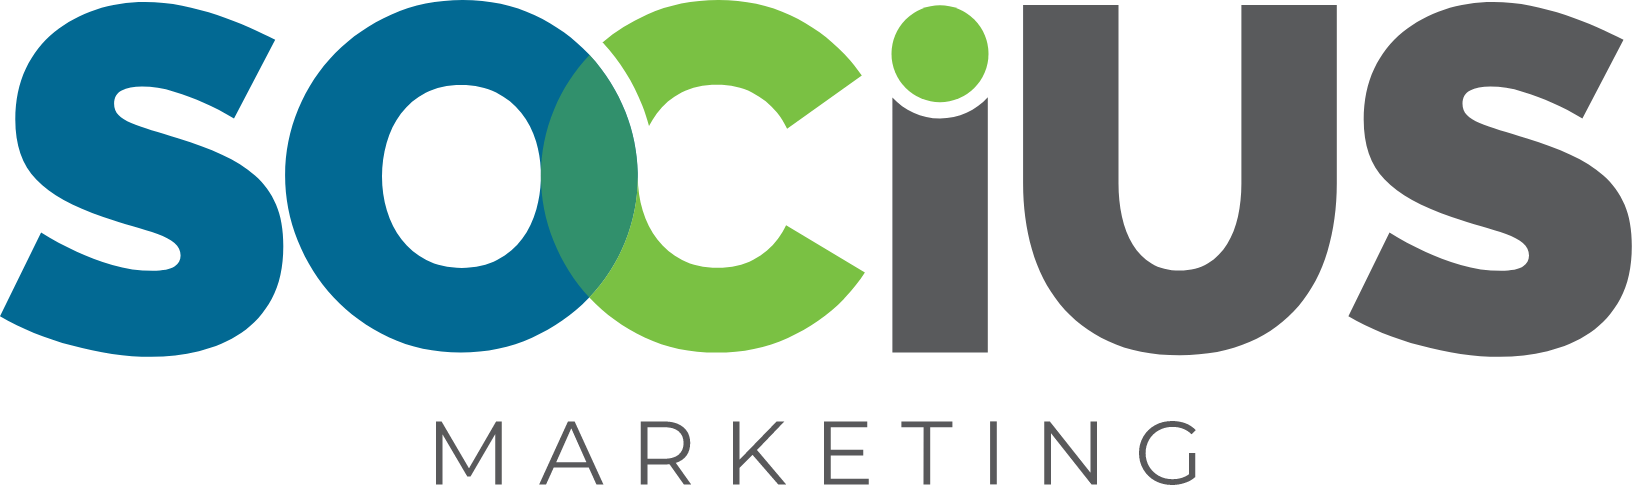 socius marketing logo